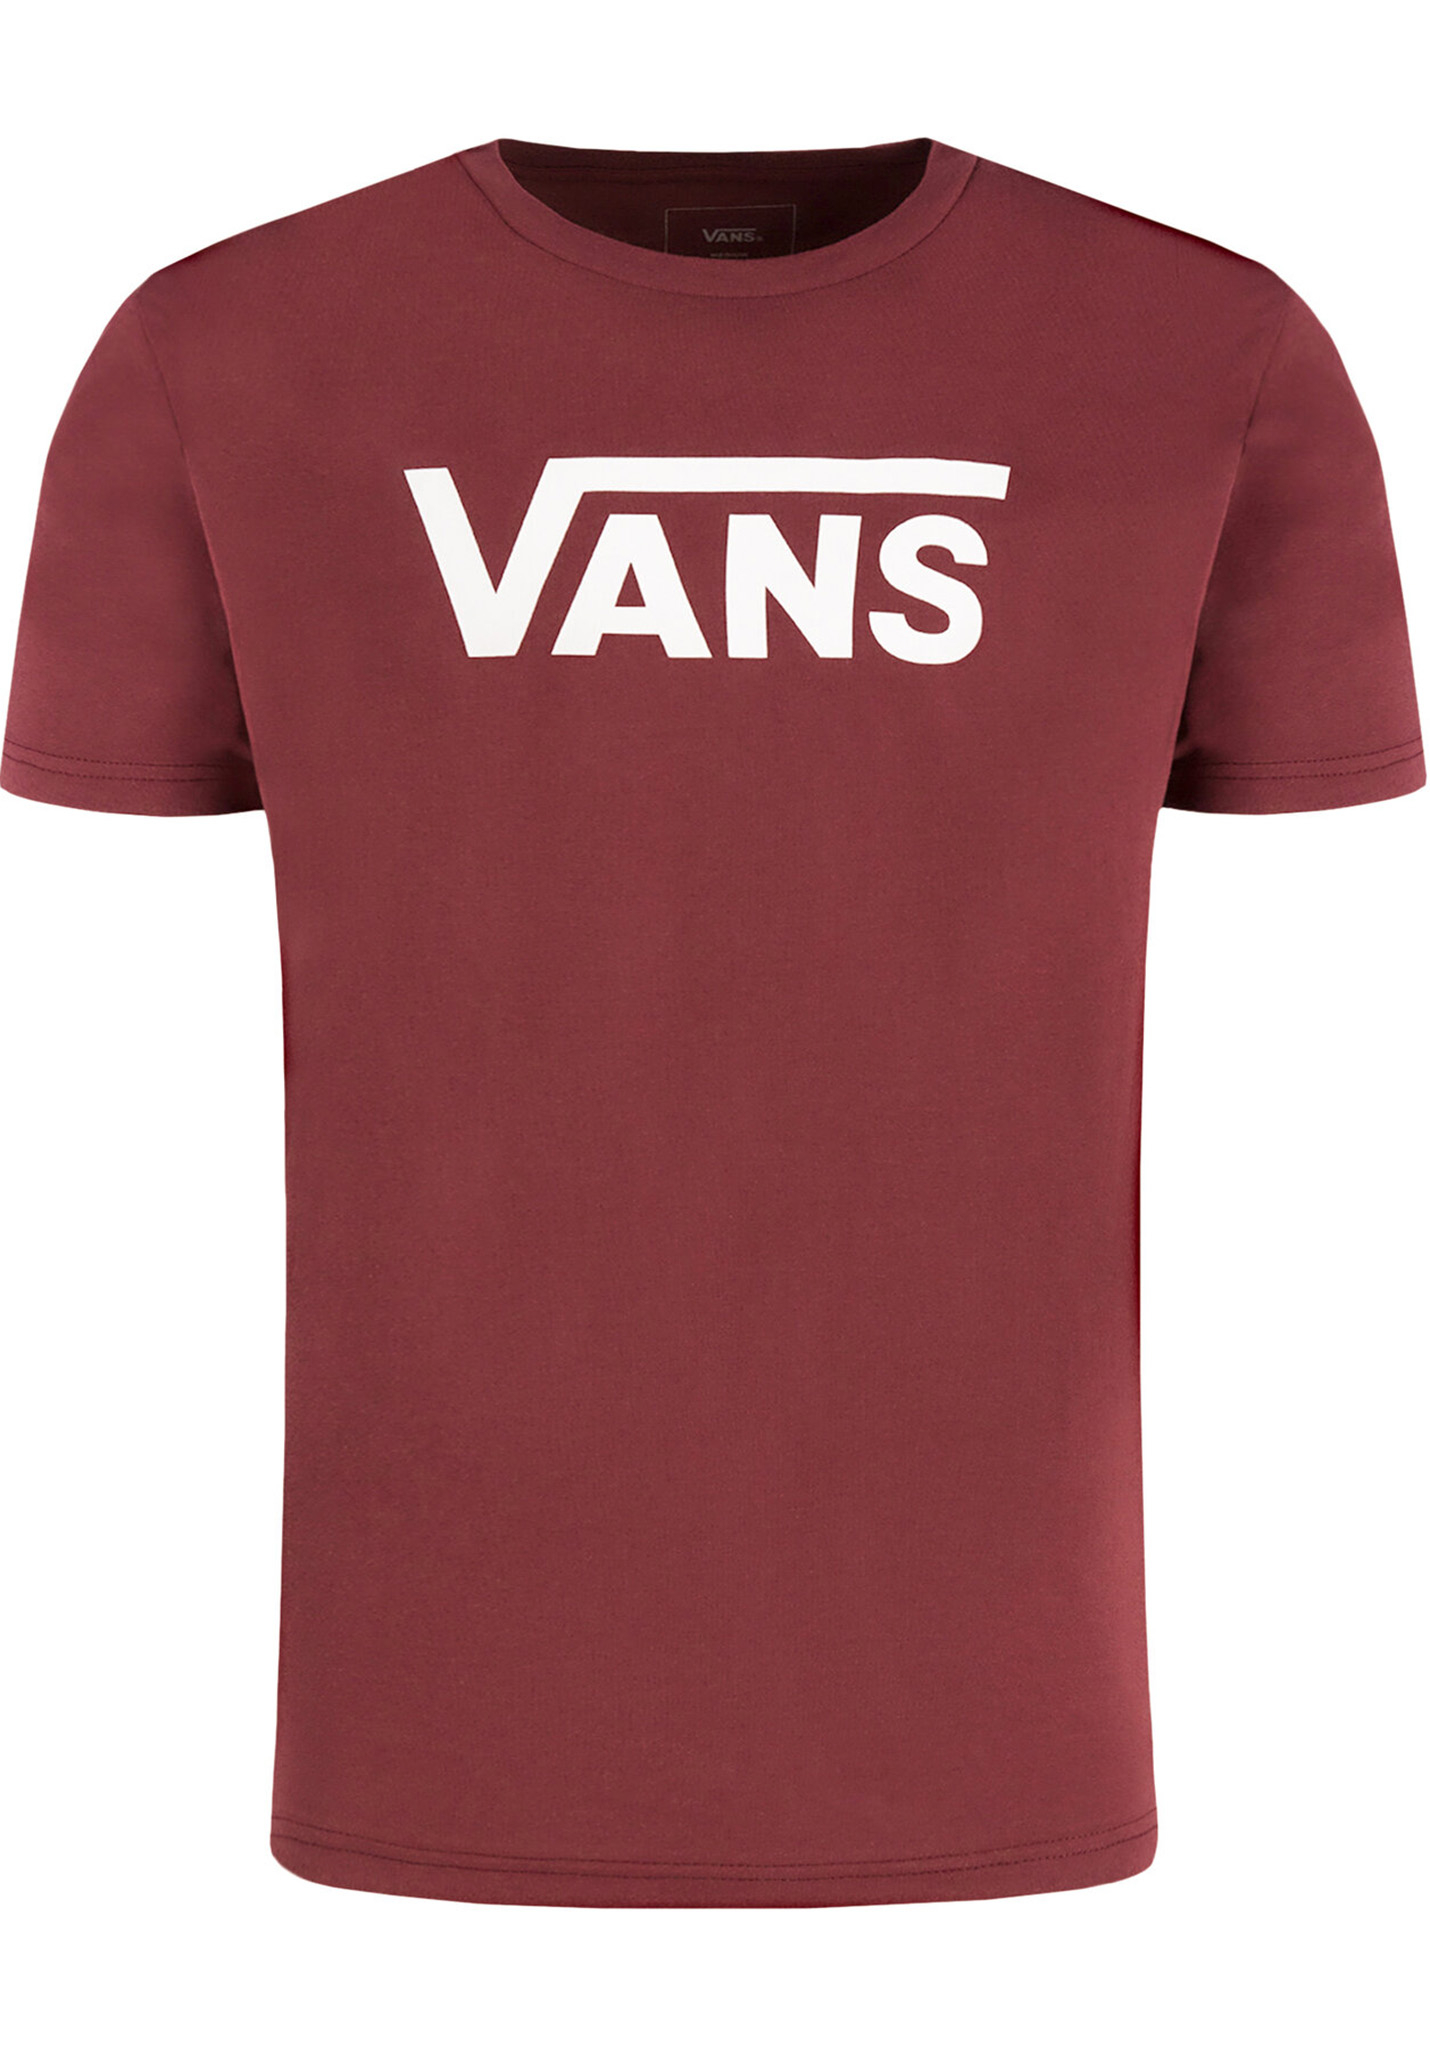 Vans Classic T-Shirt port royale/weiß XXL